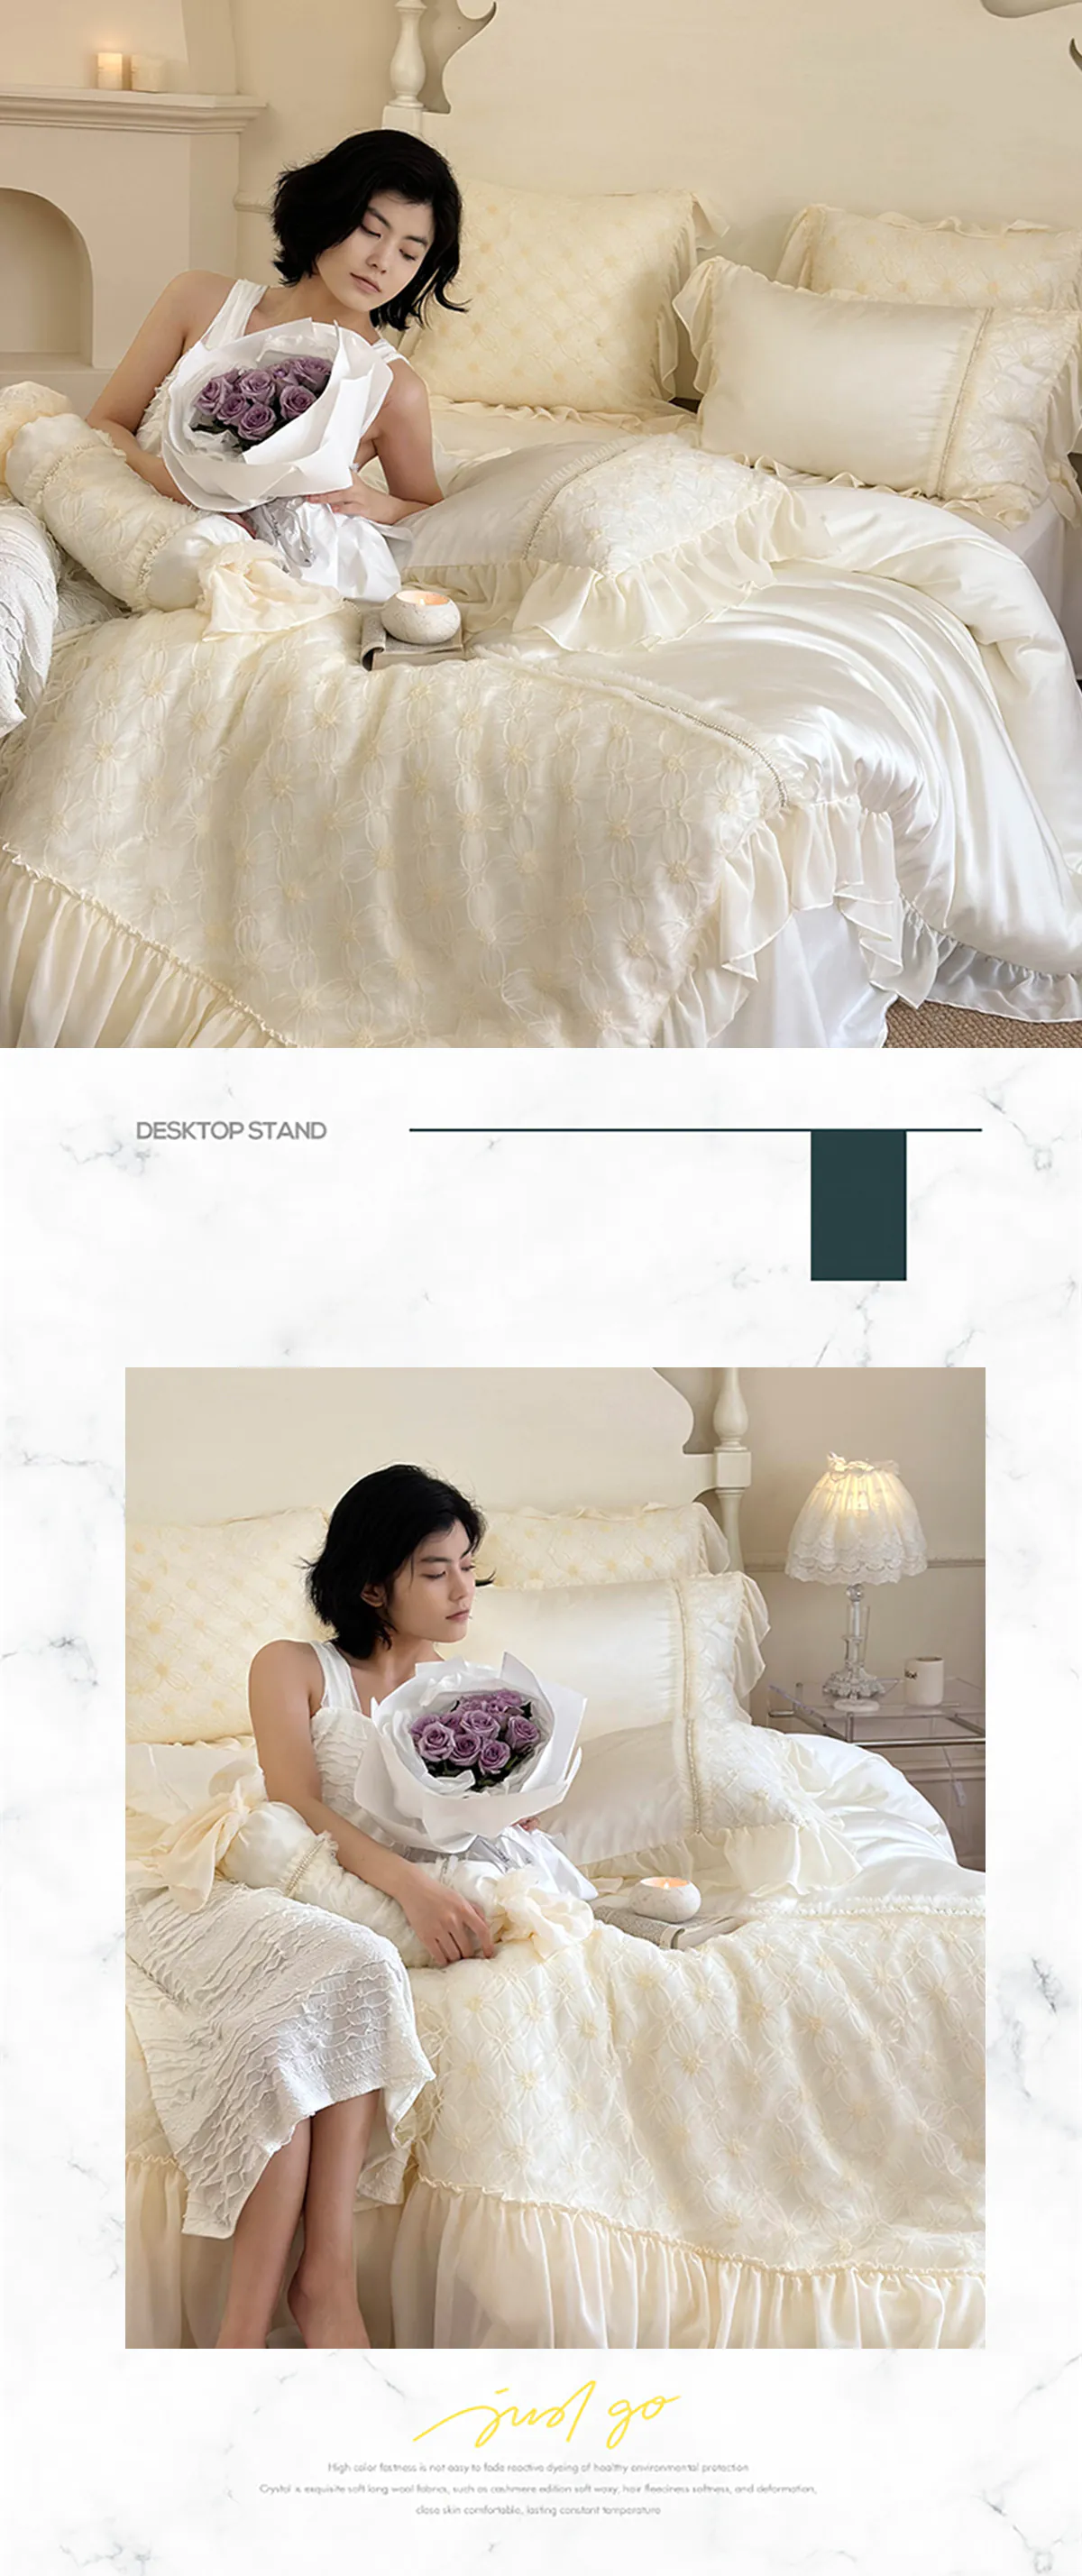 Aesthetic-Floral-Lyocell-Lace-Chiffon-Trim-Duvet-Cover-Bedsheet-Set14